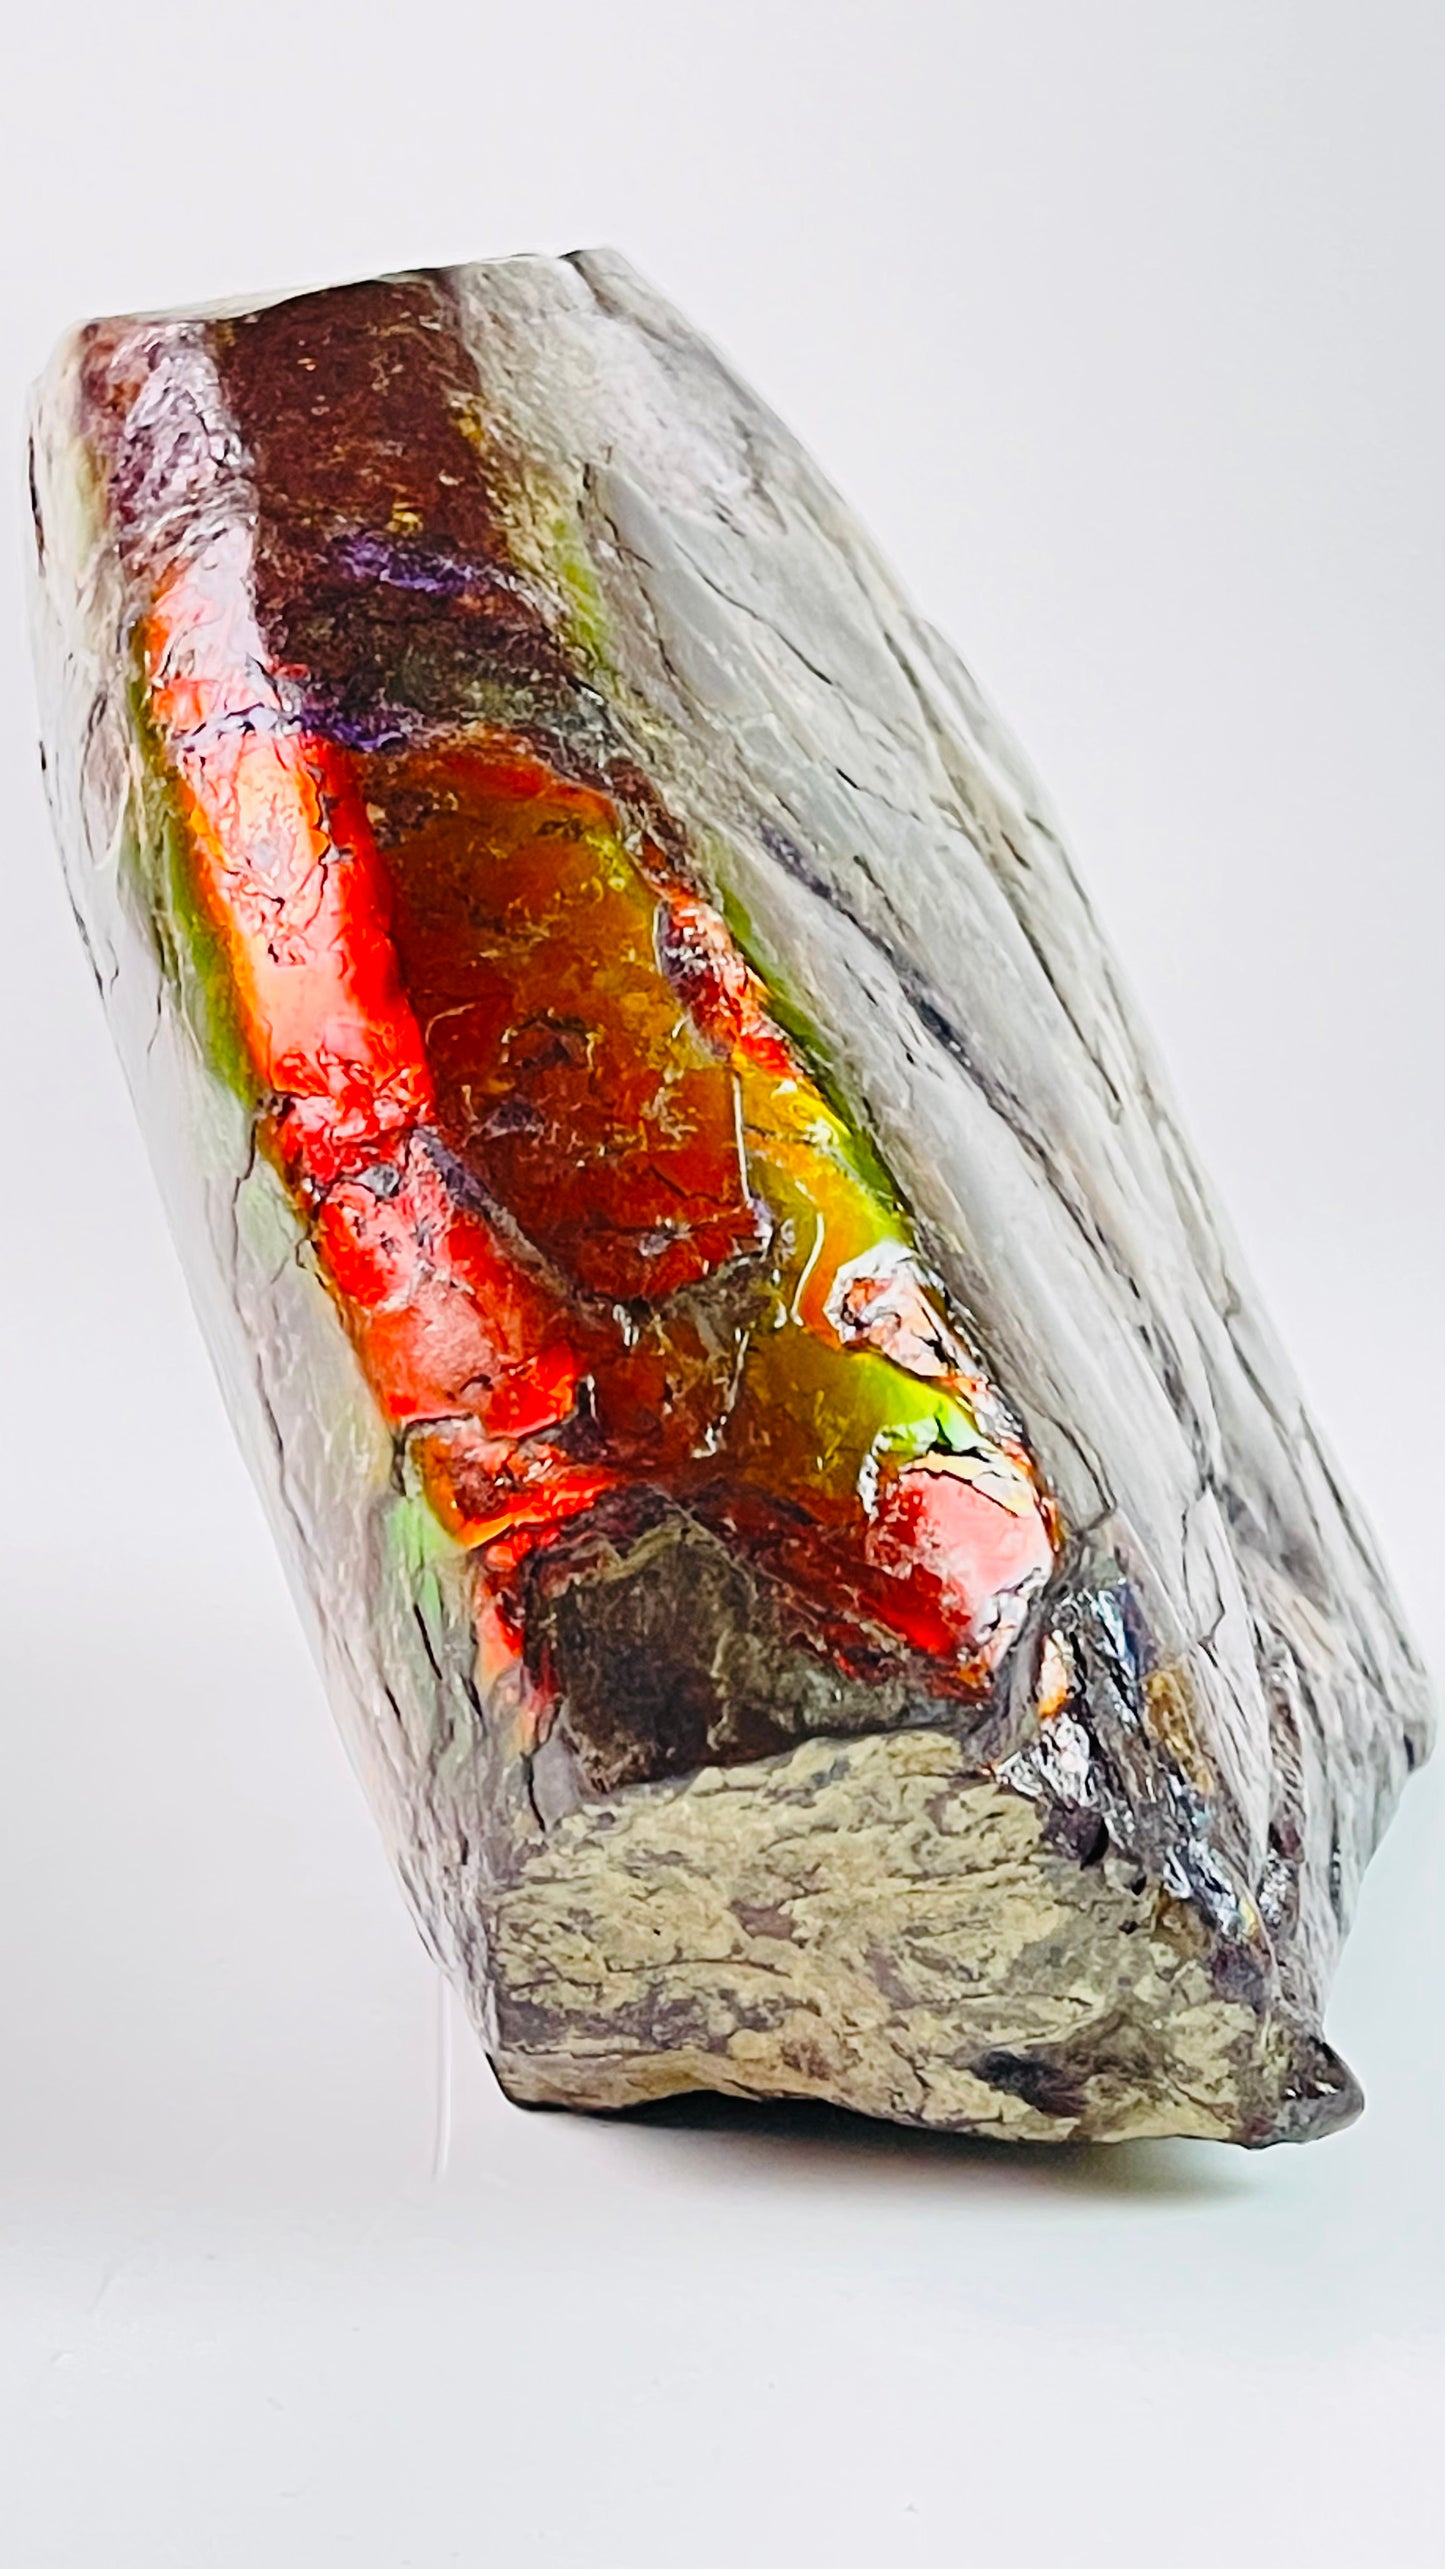 Ammolite Specimen - Rainbow feng shui ammolite display